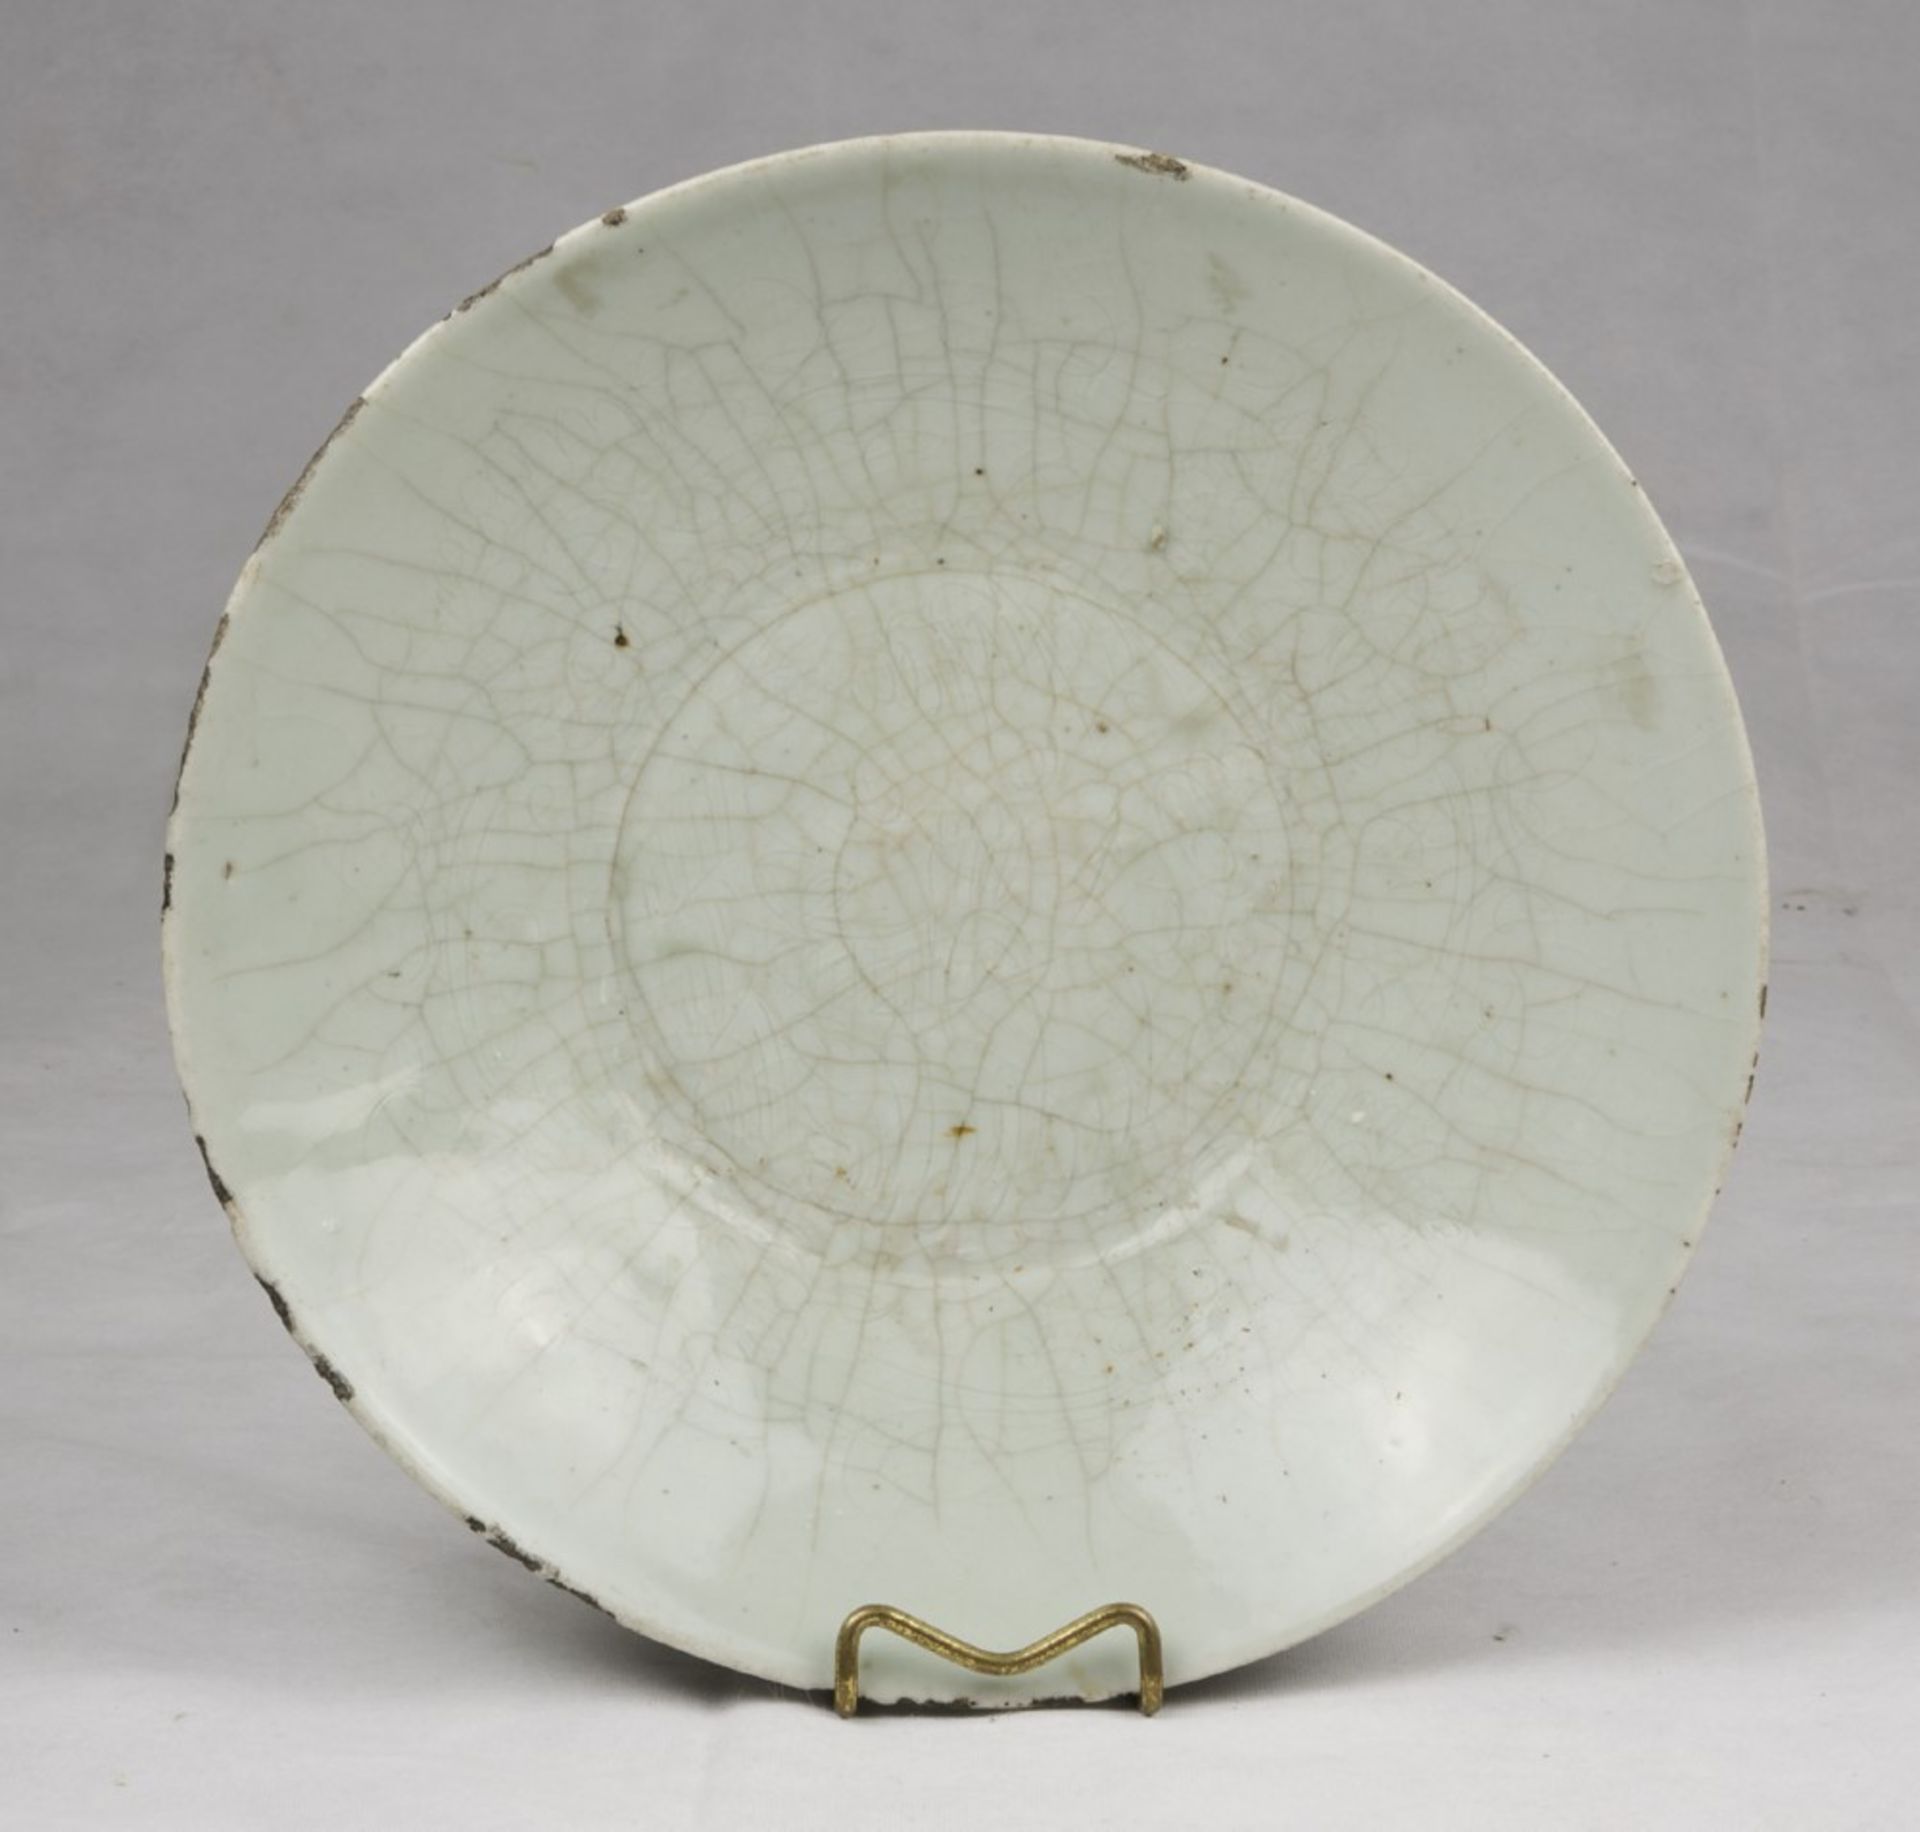 A large Chinese celadon enamel porcelain dish. 17th century. Measures cm. 7 x 34. GRANDE PIATTO IN